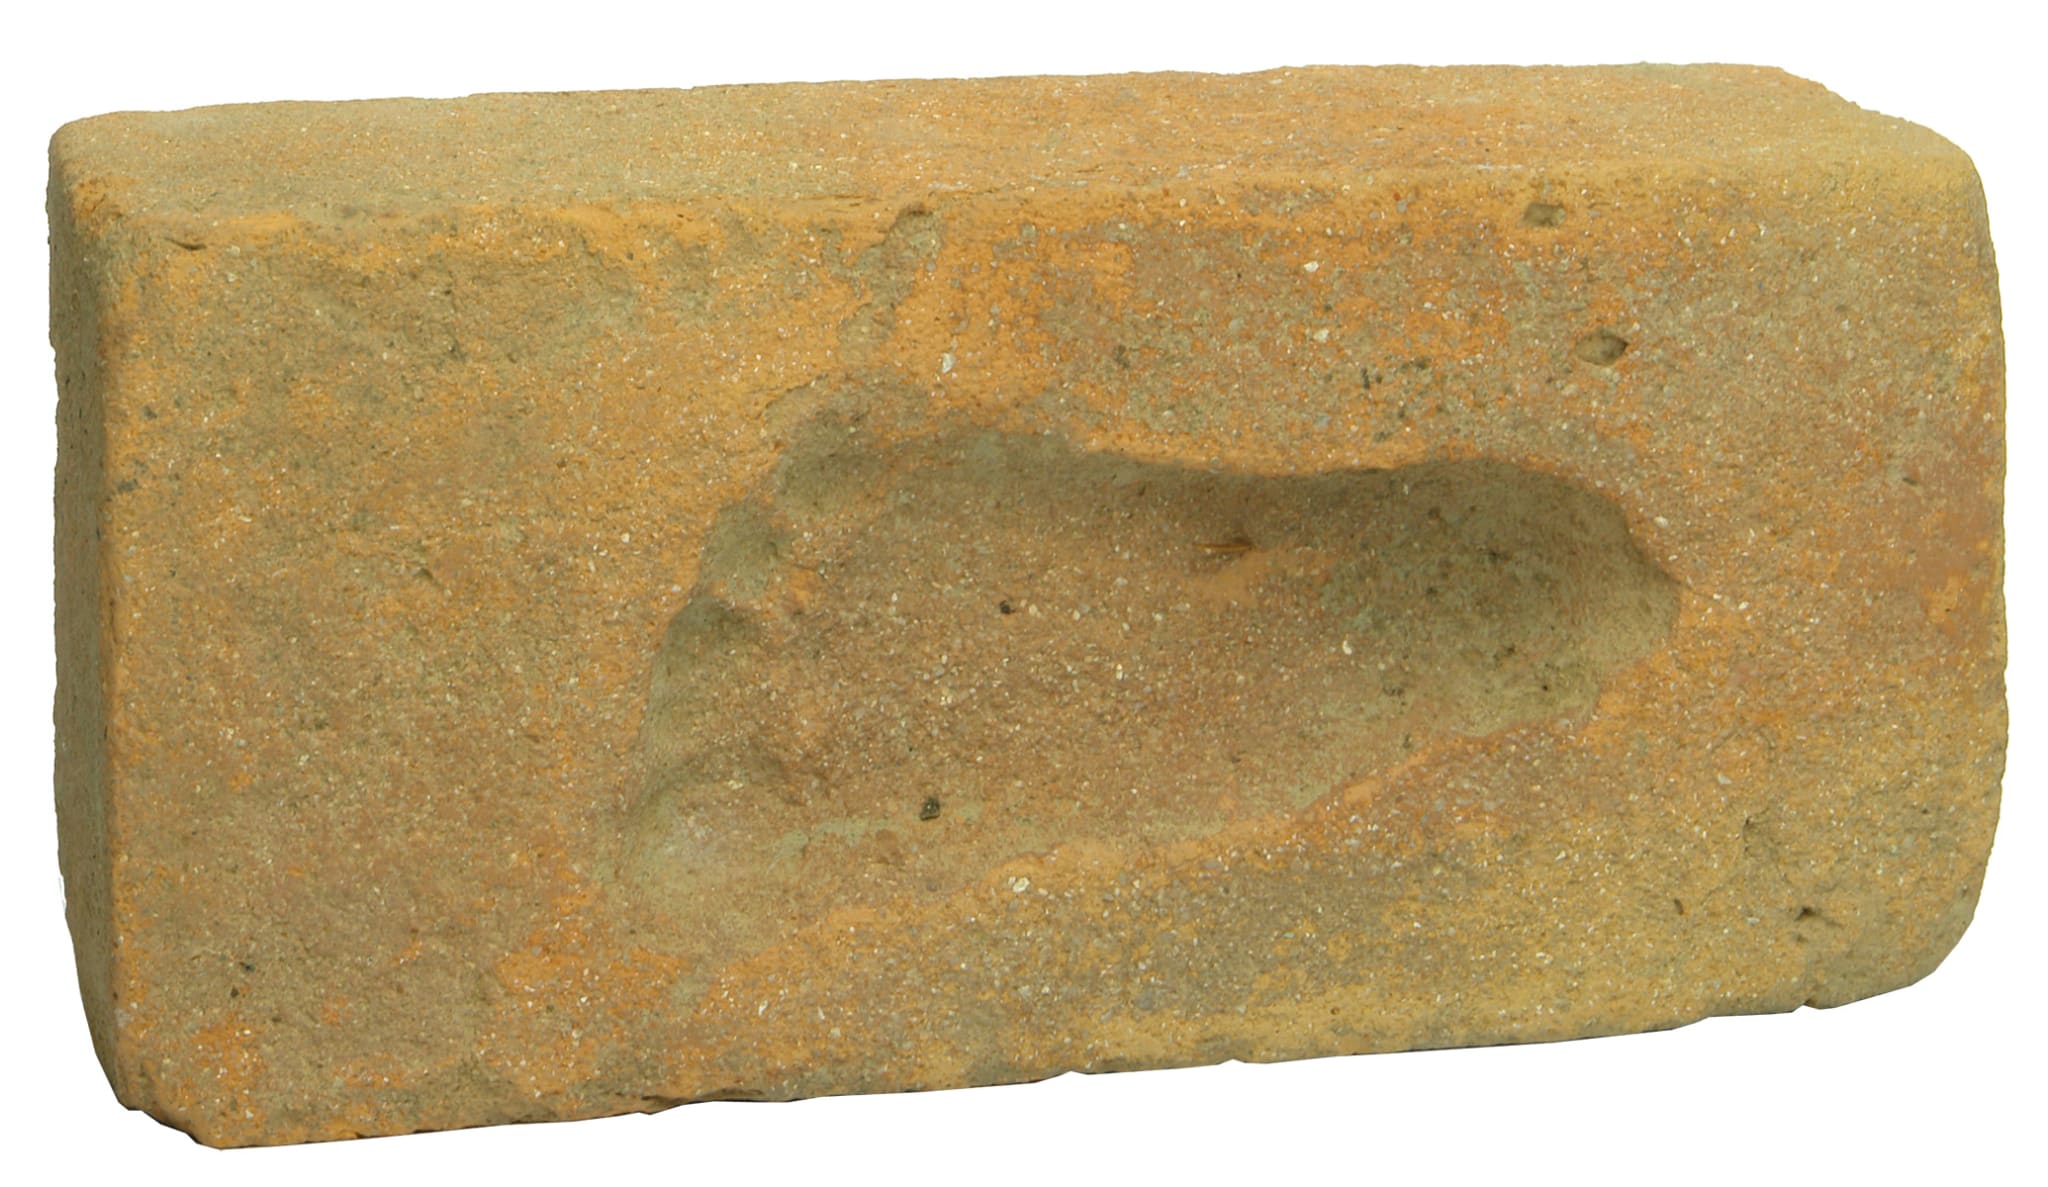 Footprint Frog Antique Brick